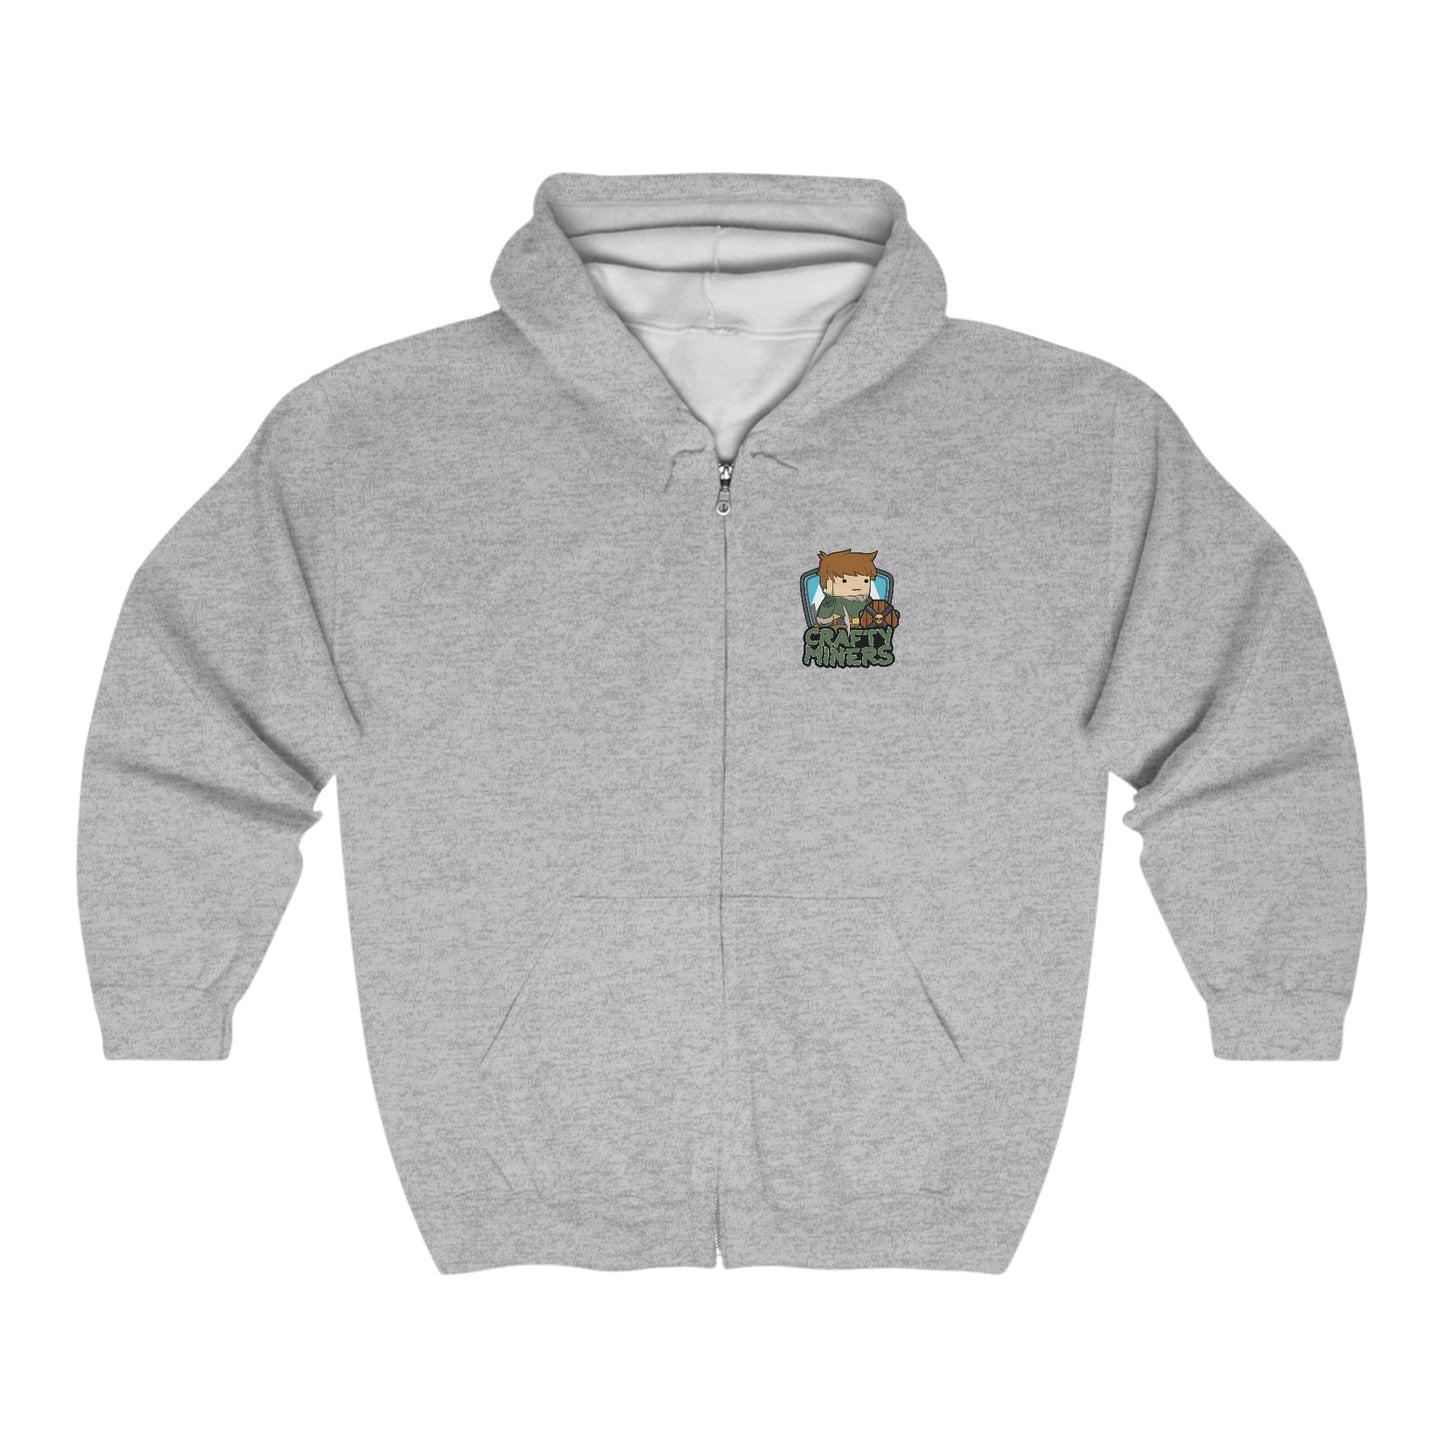 Crafty Miners Let's Rumble! Unisex Heavy Blend™ Full Zip Hooded Sweatshirt